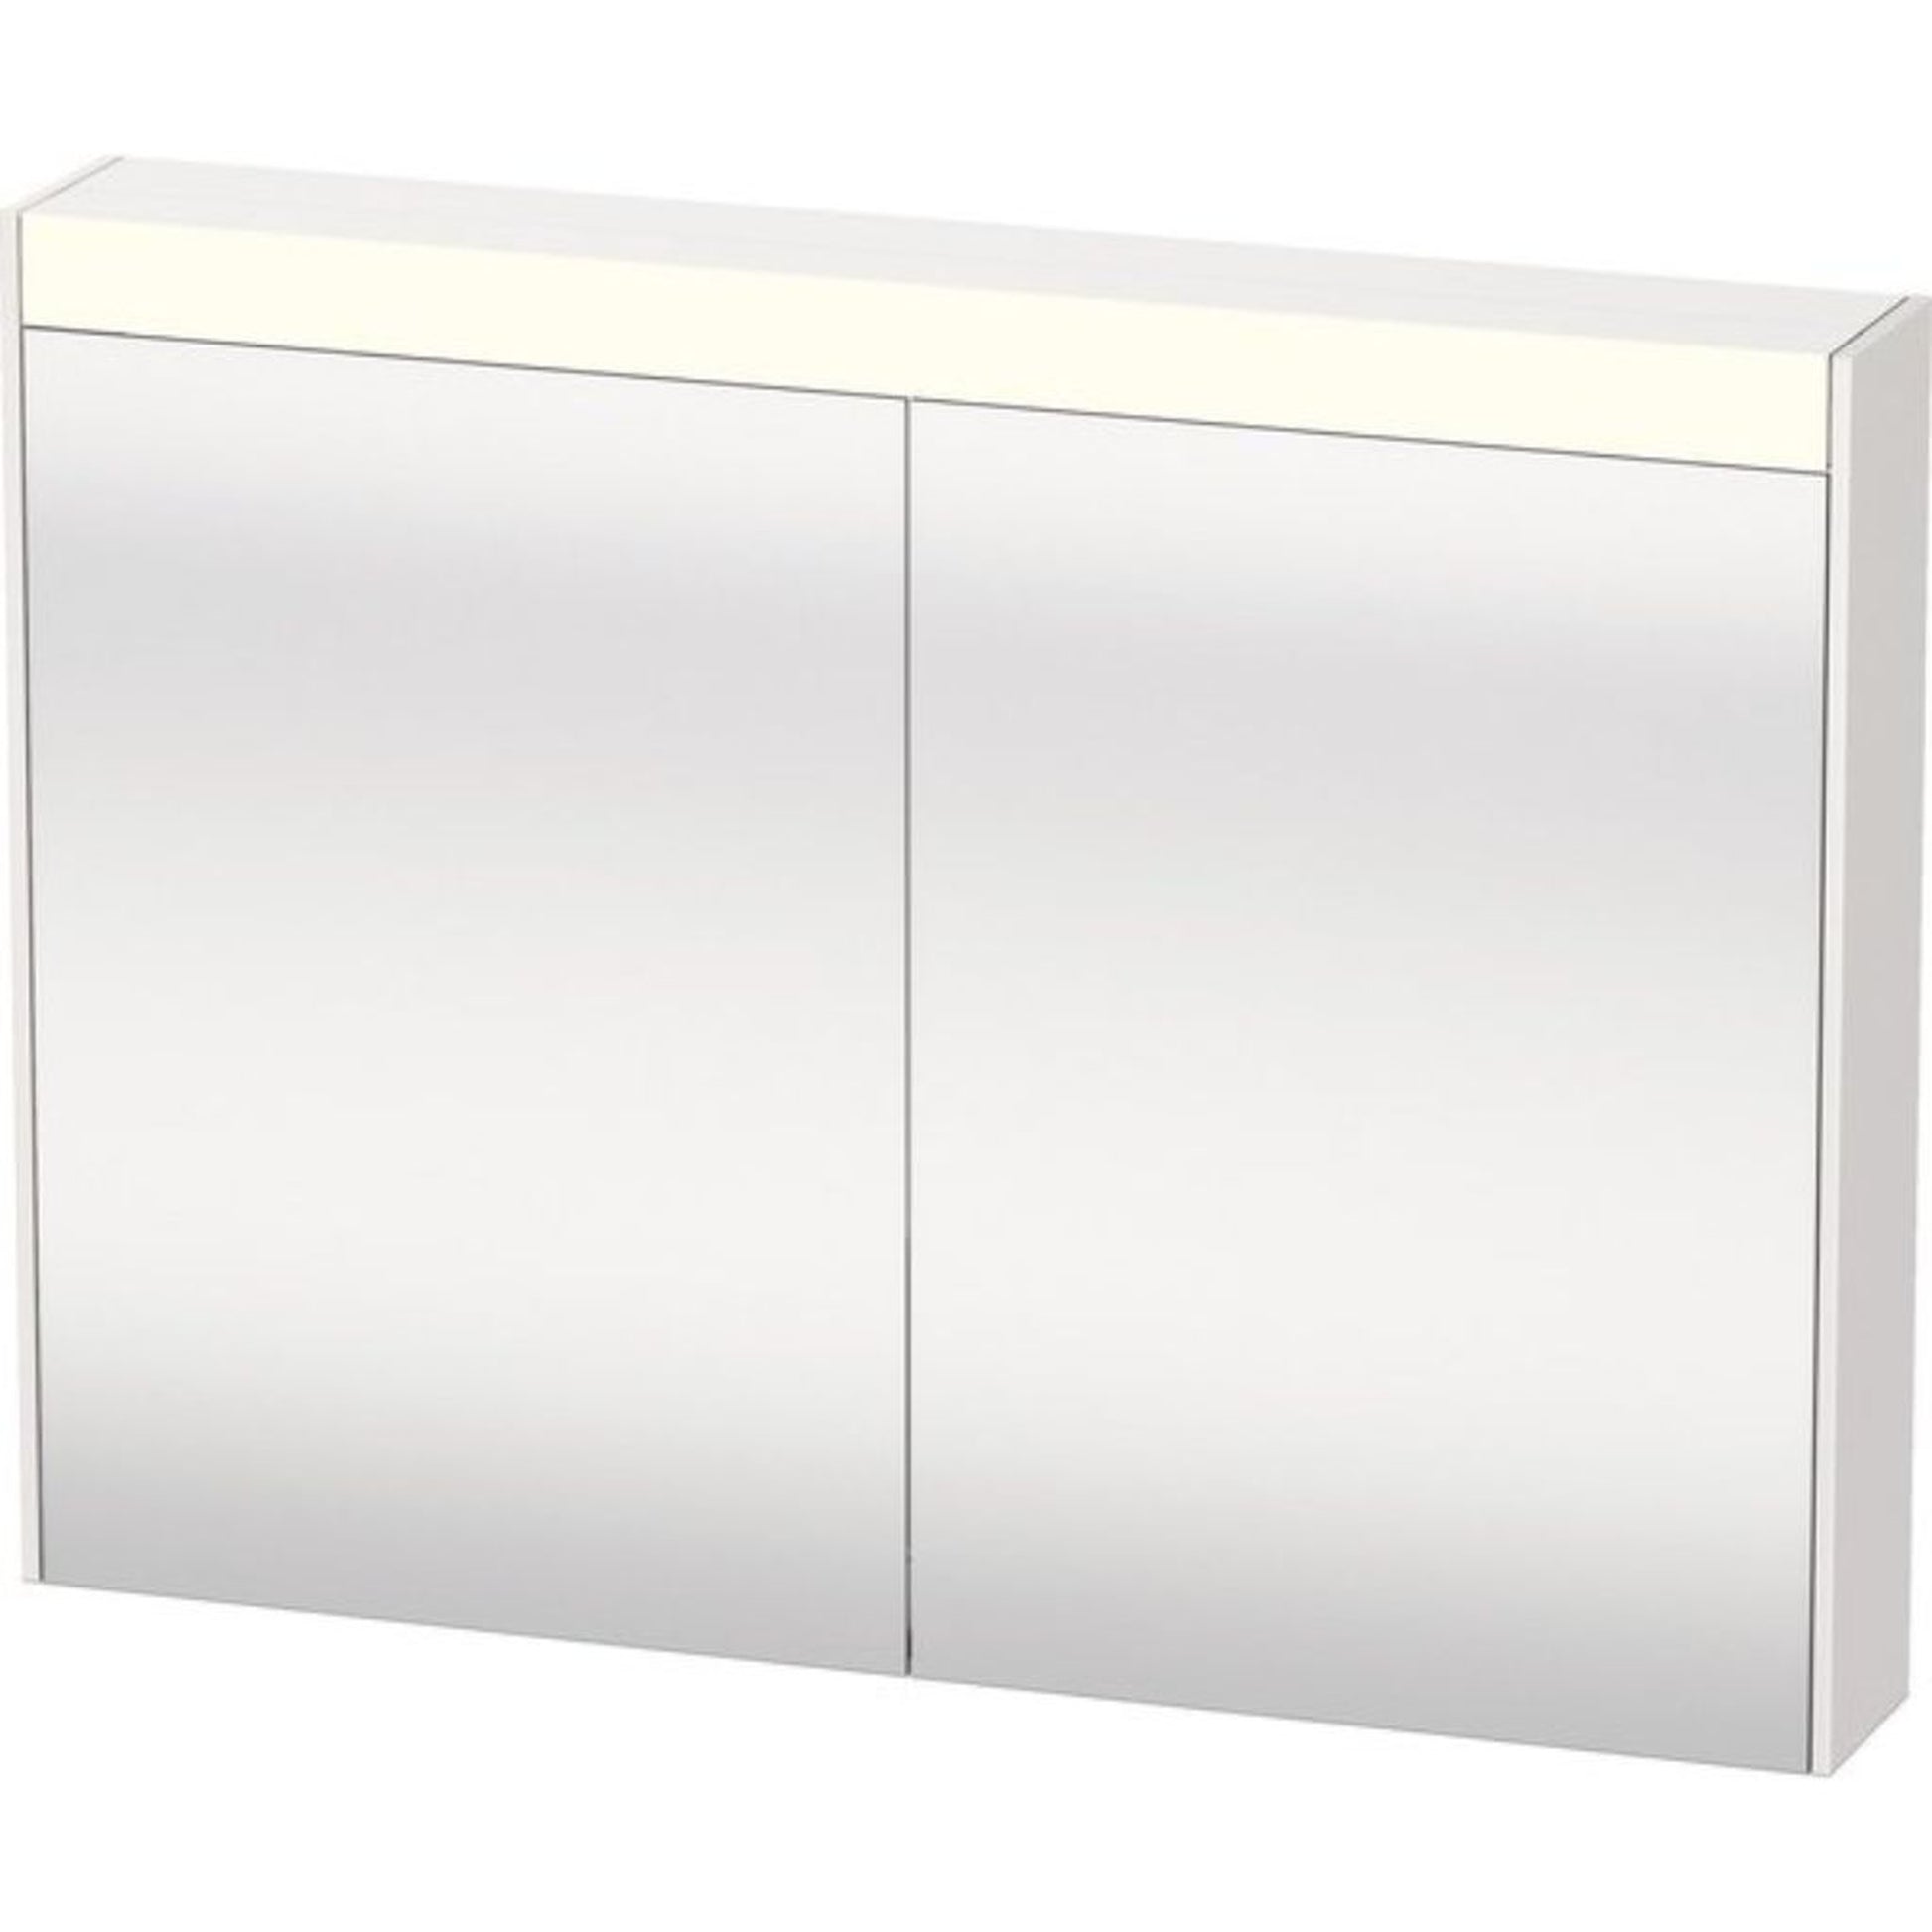 Duravit Brioso 32" x 30" x 6" Mirror Cabinet With Lighting White High Gloss